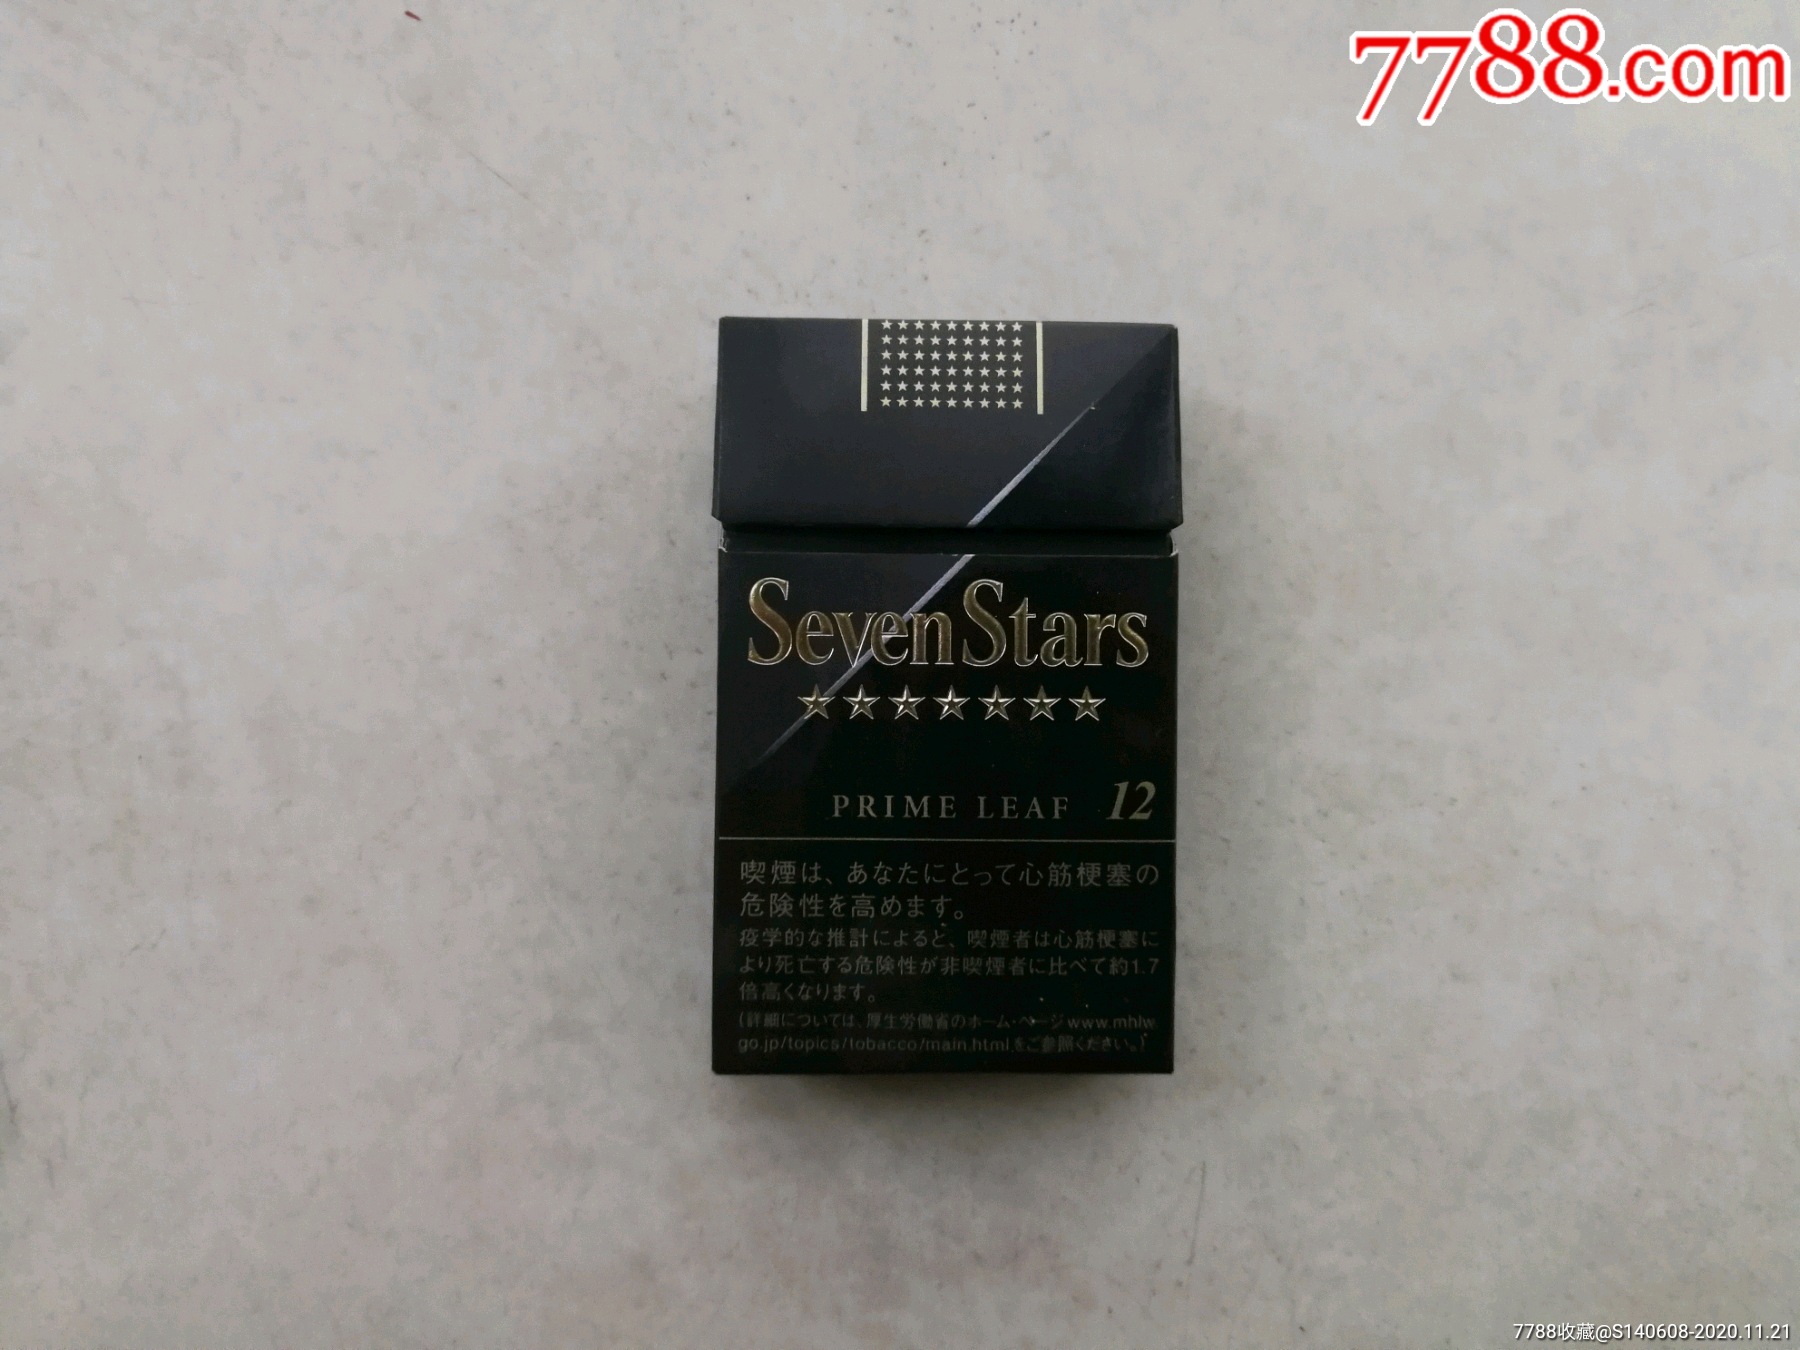 Seven Stars七星软黑4毫克 - 香烟漫谈 - 烟悦网论坛